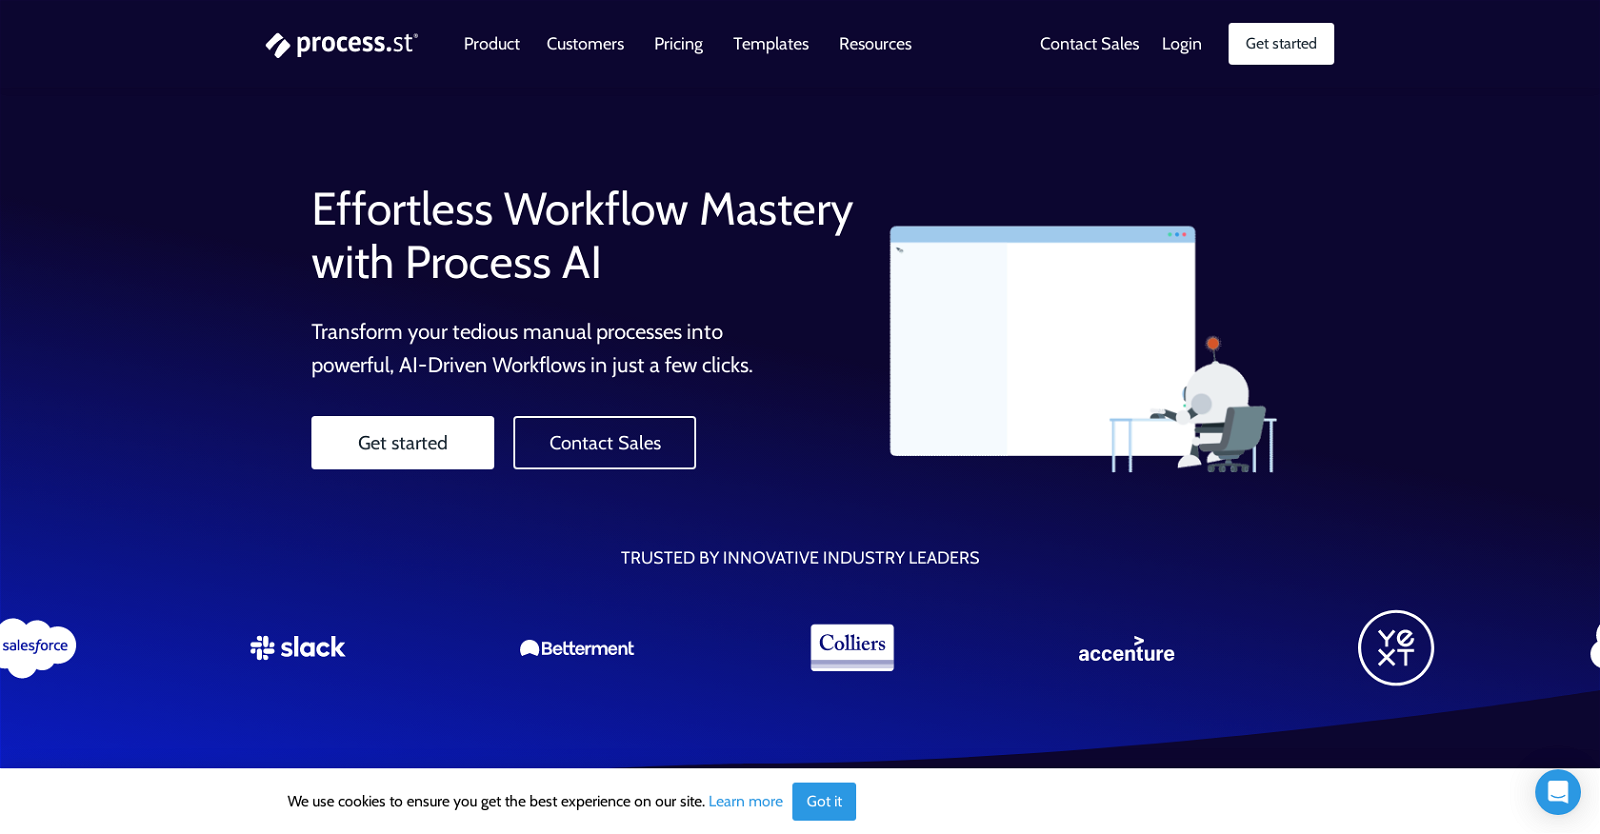 Process.st website